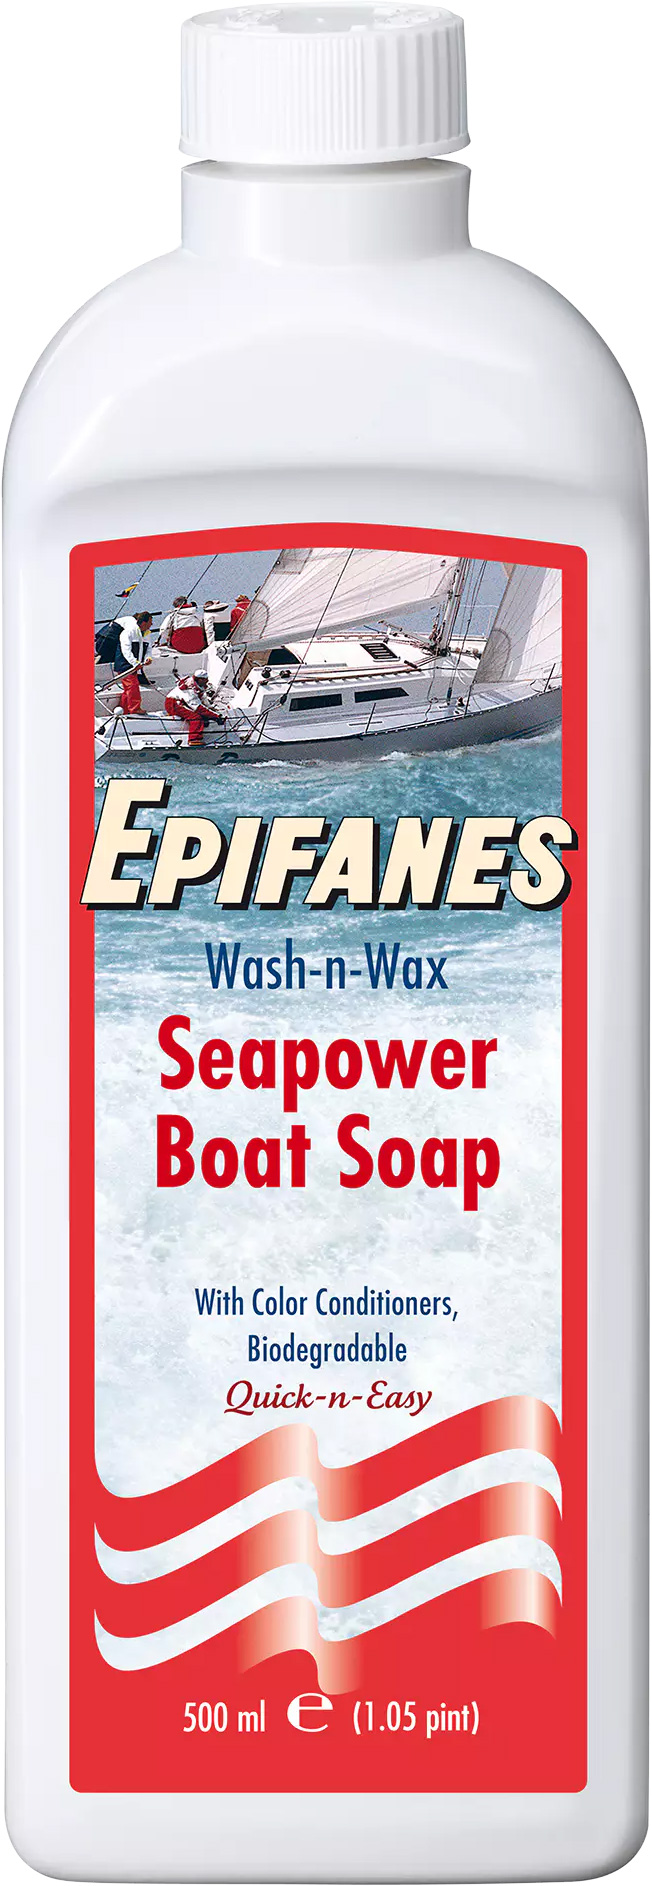 Epifanes Seapower Wash-n-Wax Boat Soap 500 ml